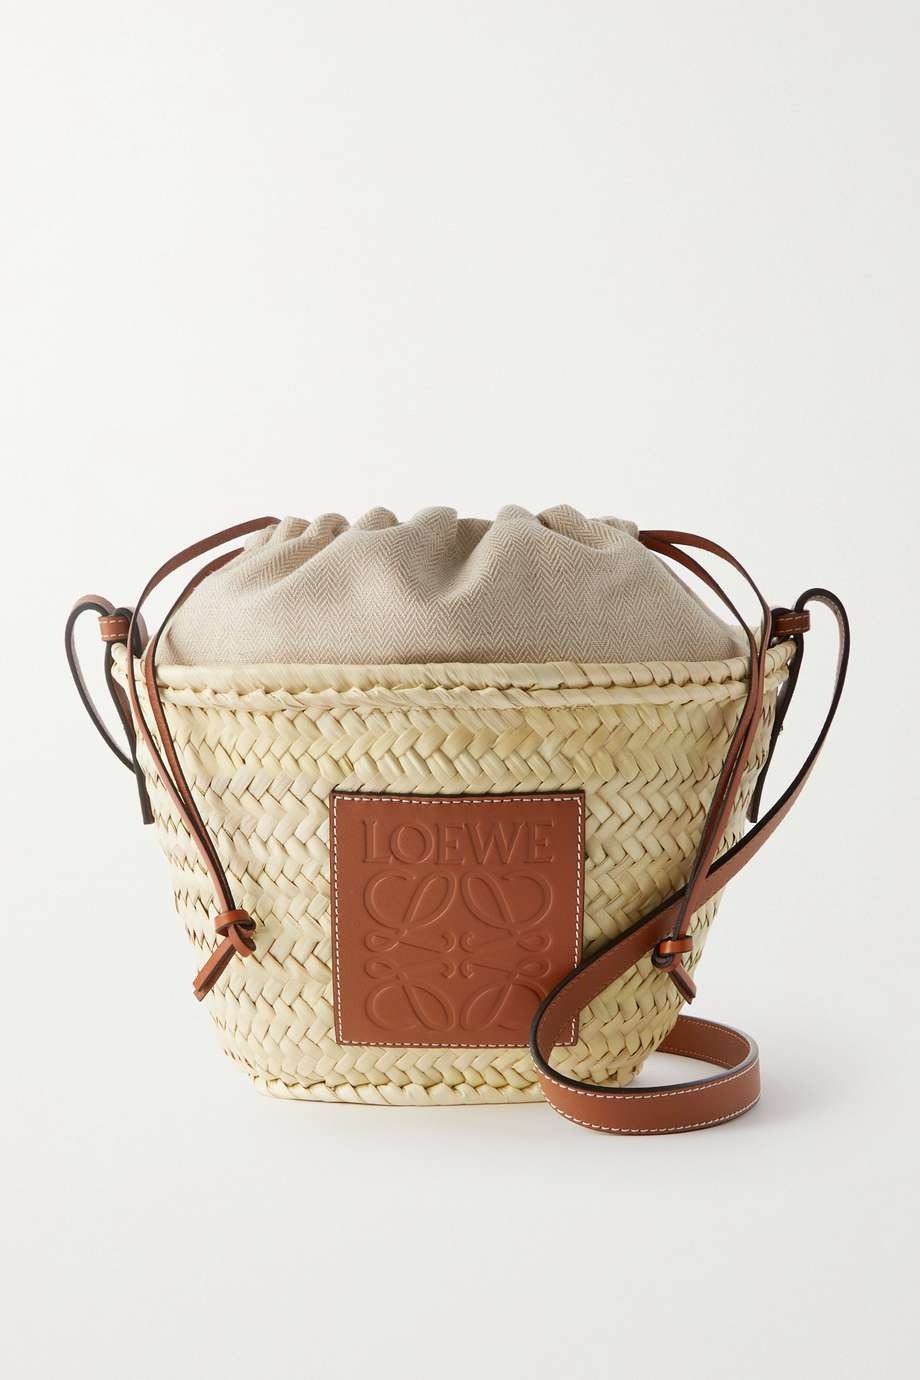 Loewe - Authenticated Gate Pocket Handbag - Leather Burgundy Plain for Women, Never Worn